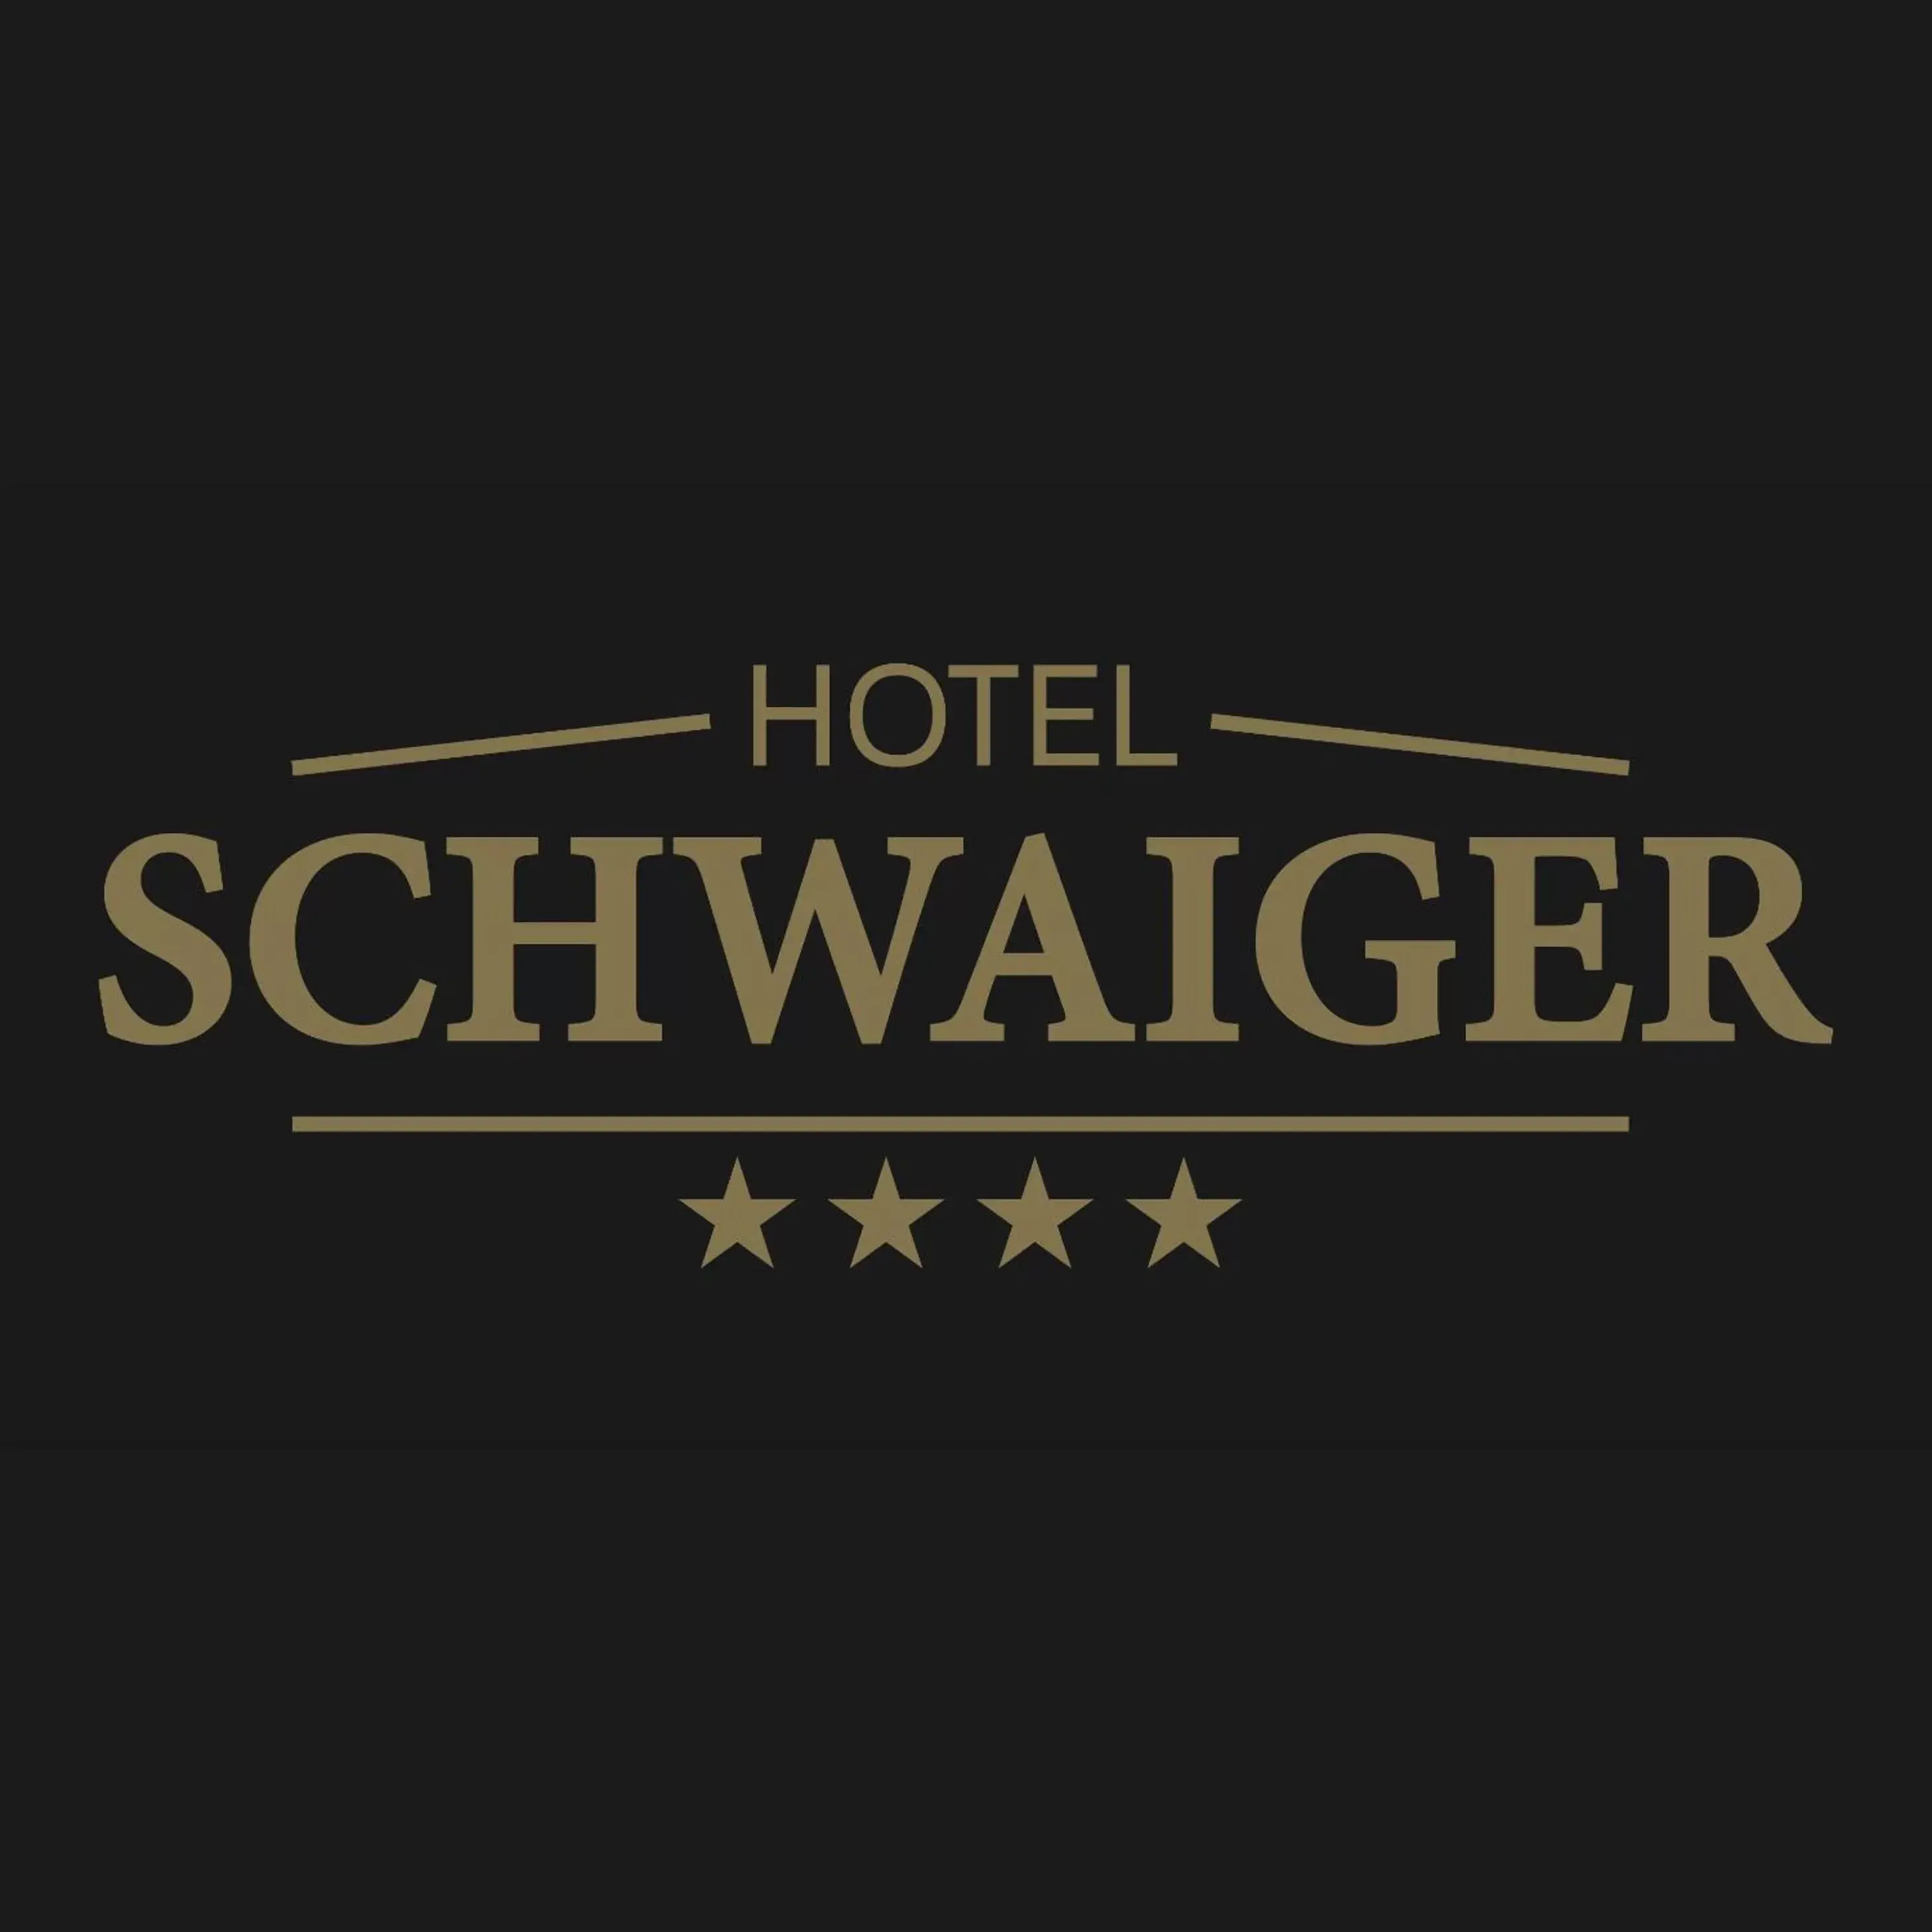 Property logo or sign, Property Logo/Sign in Hotel Schwaiger